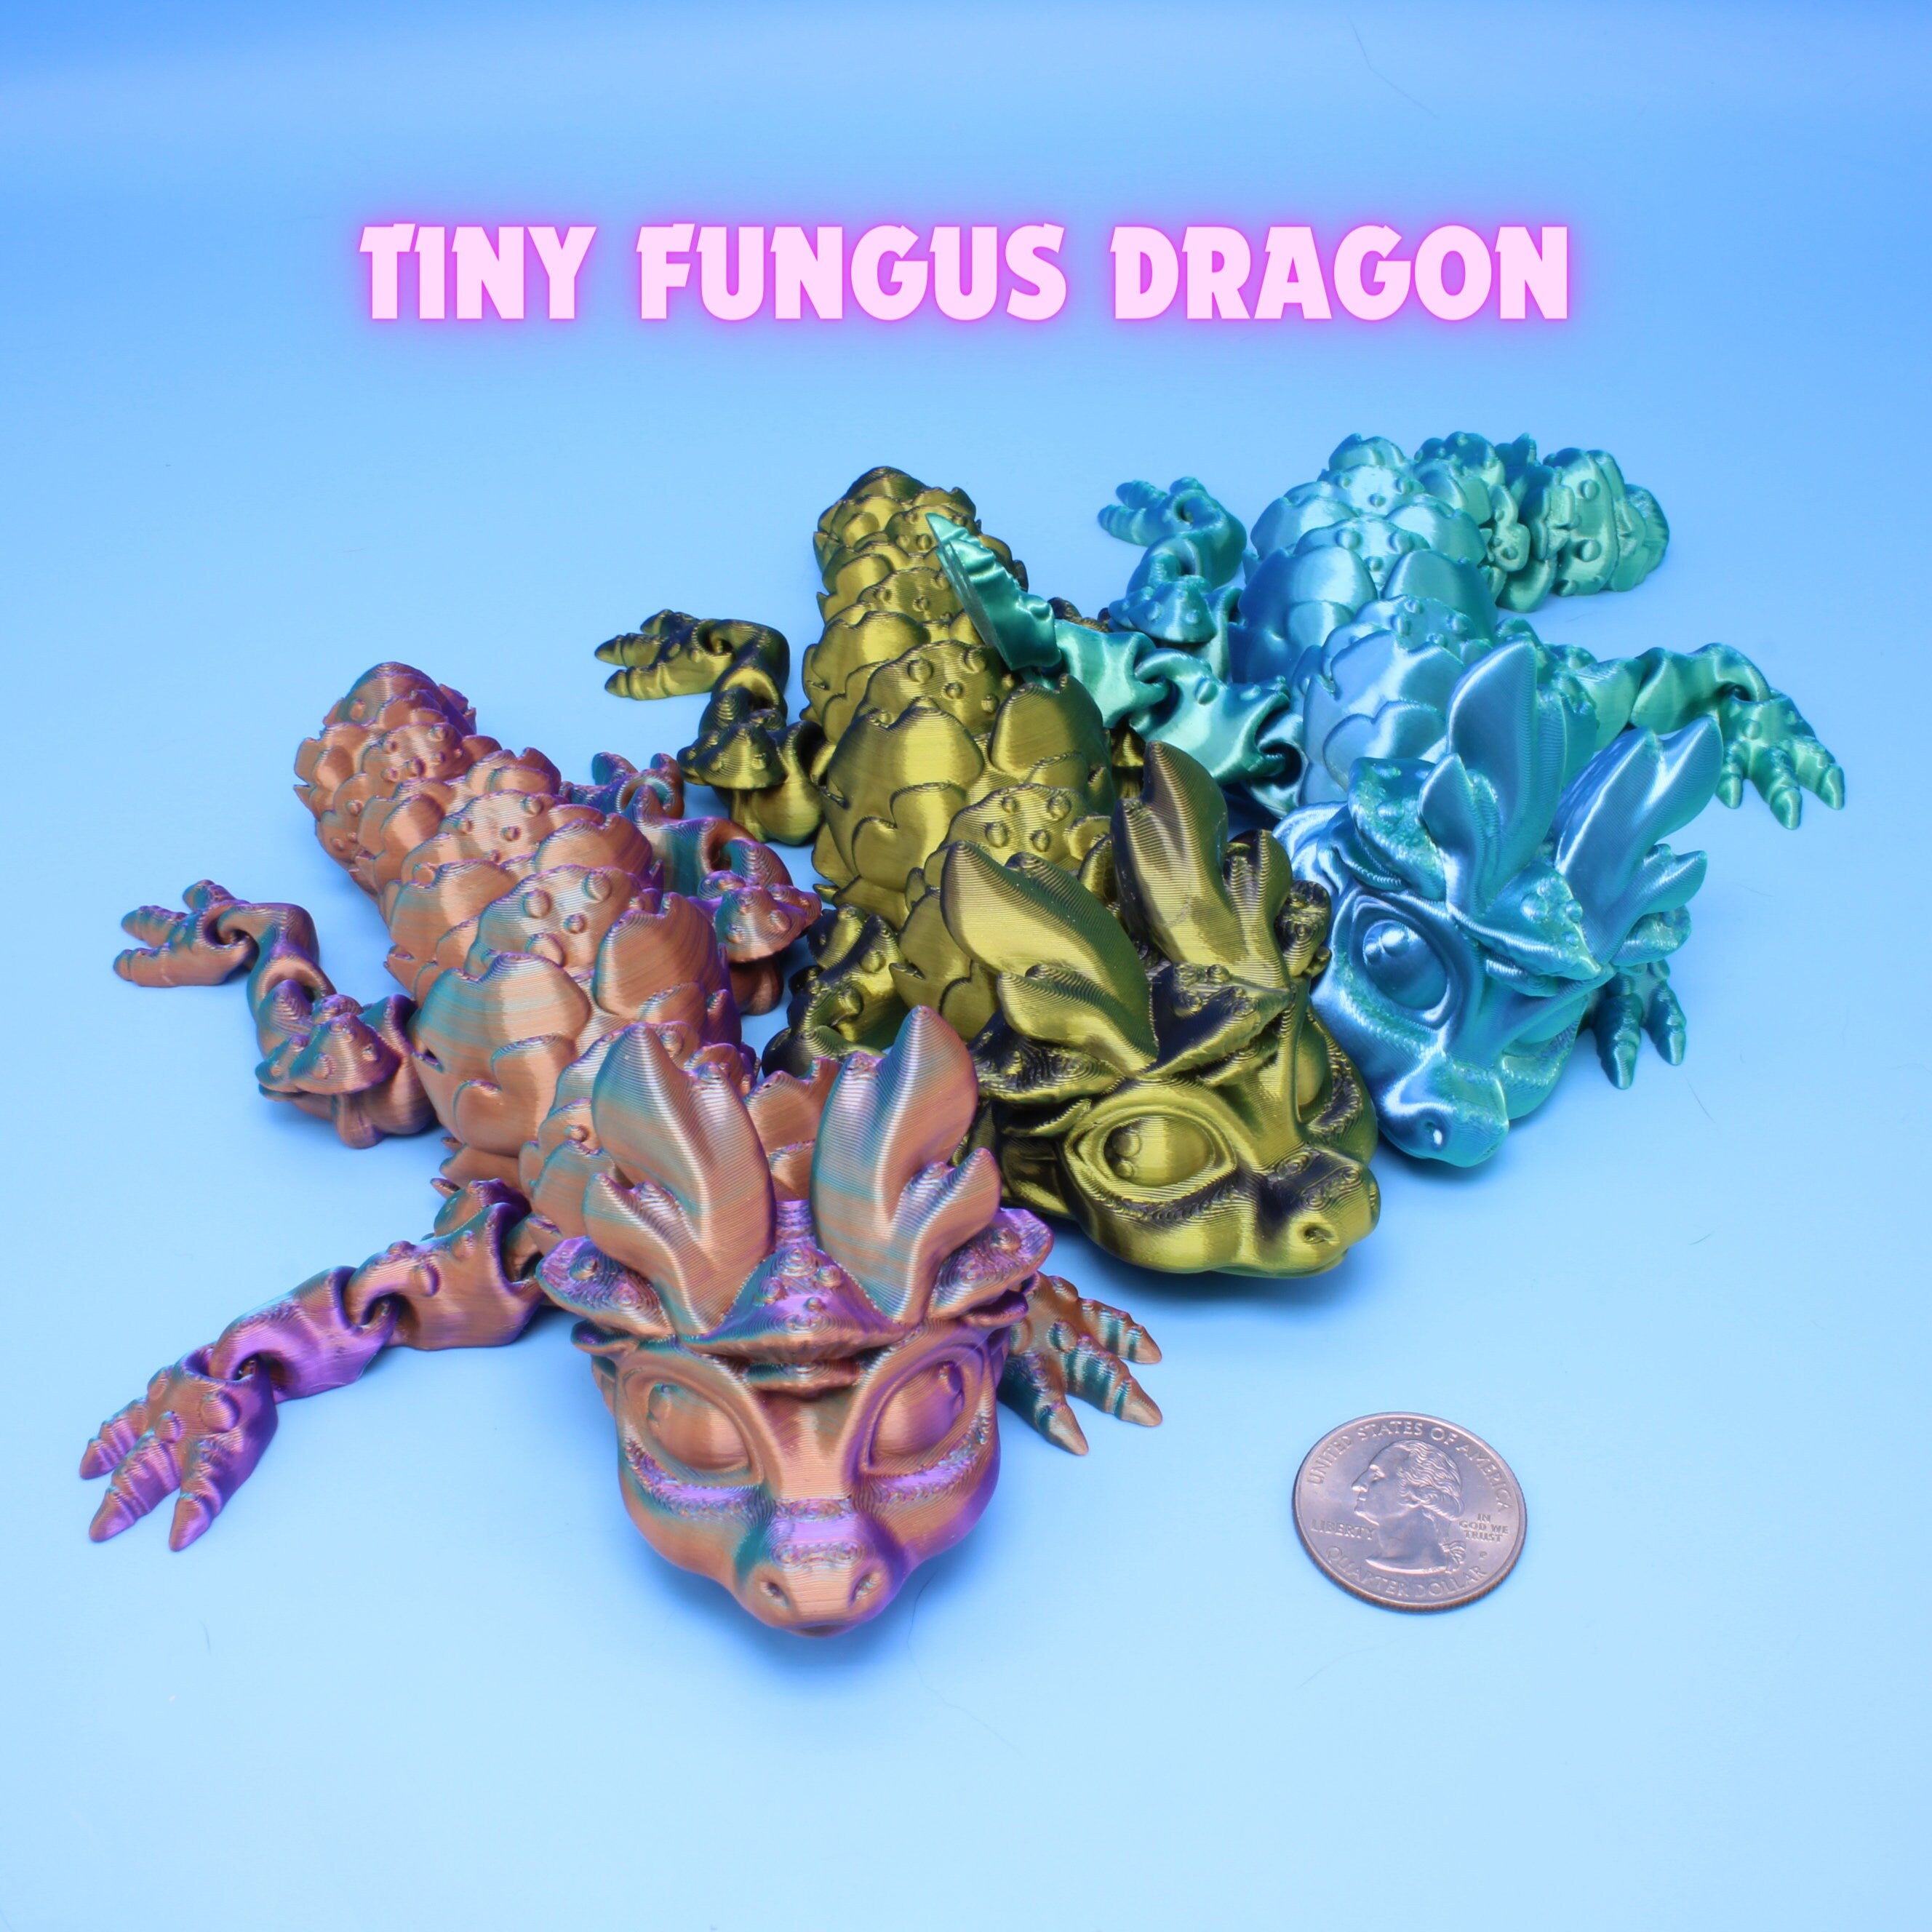 Fungus Tiny Dragon 3D Printed Articulating